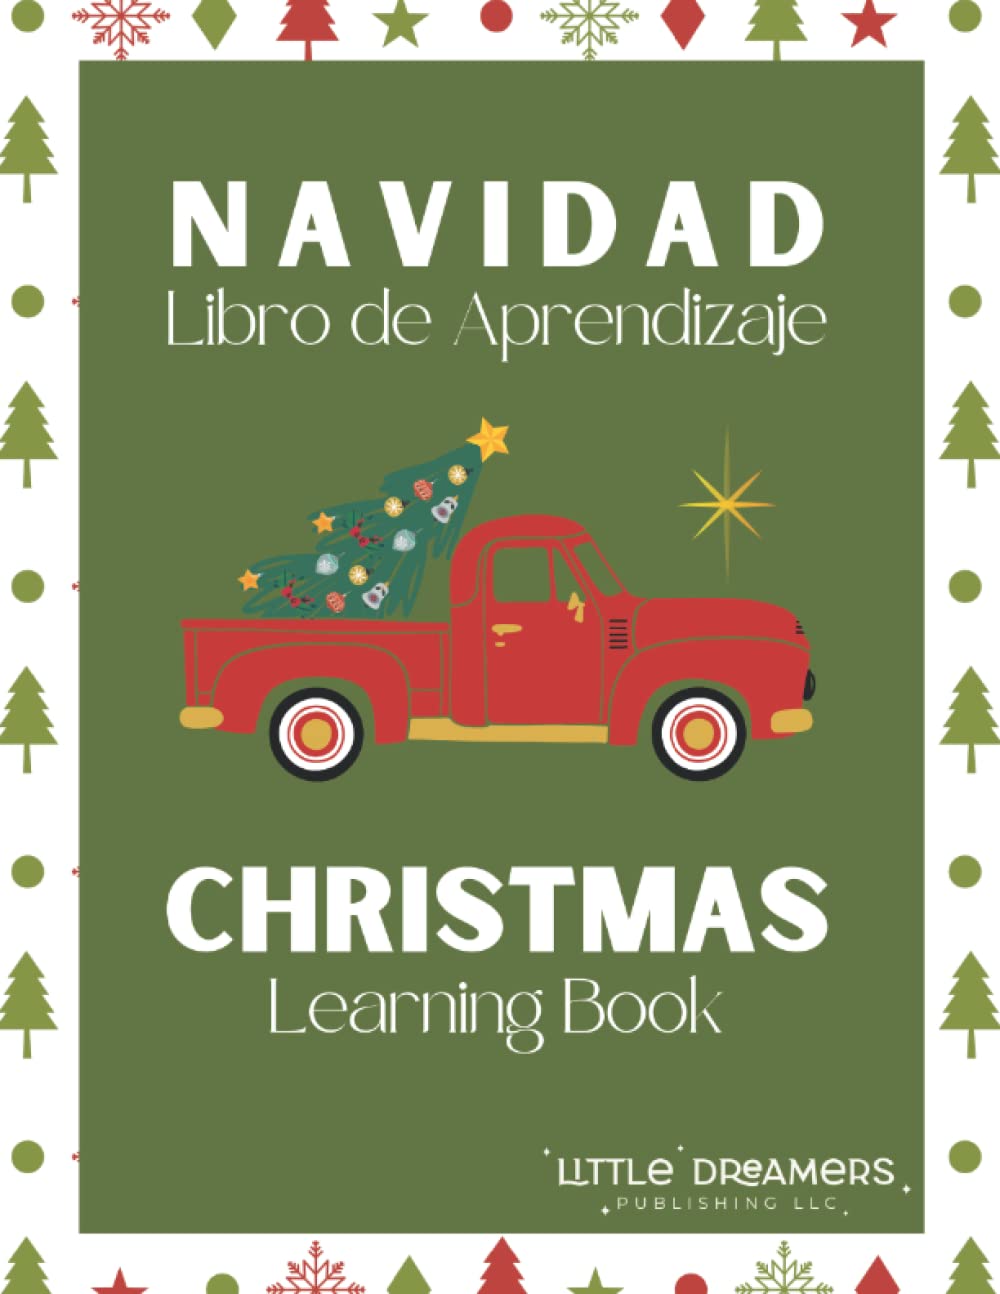 Christmas Learning Book: Navidad Libro de Aprendizaje